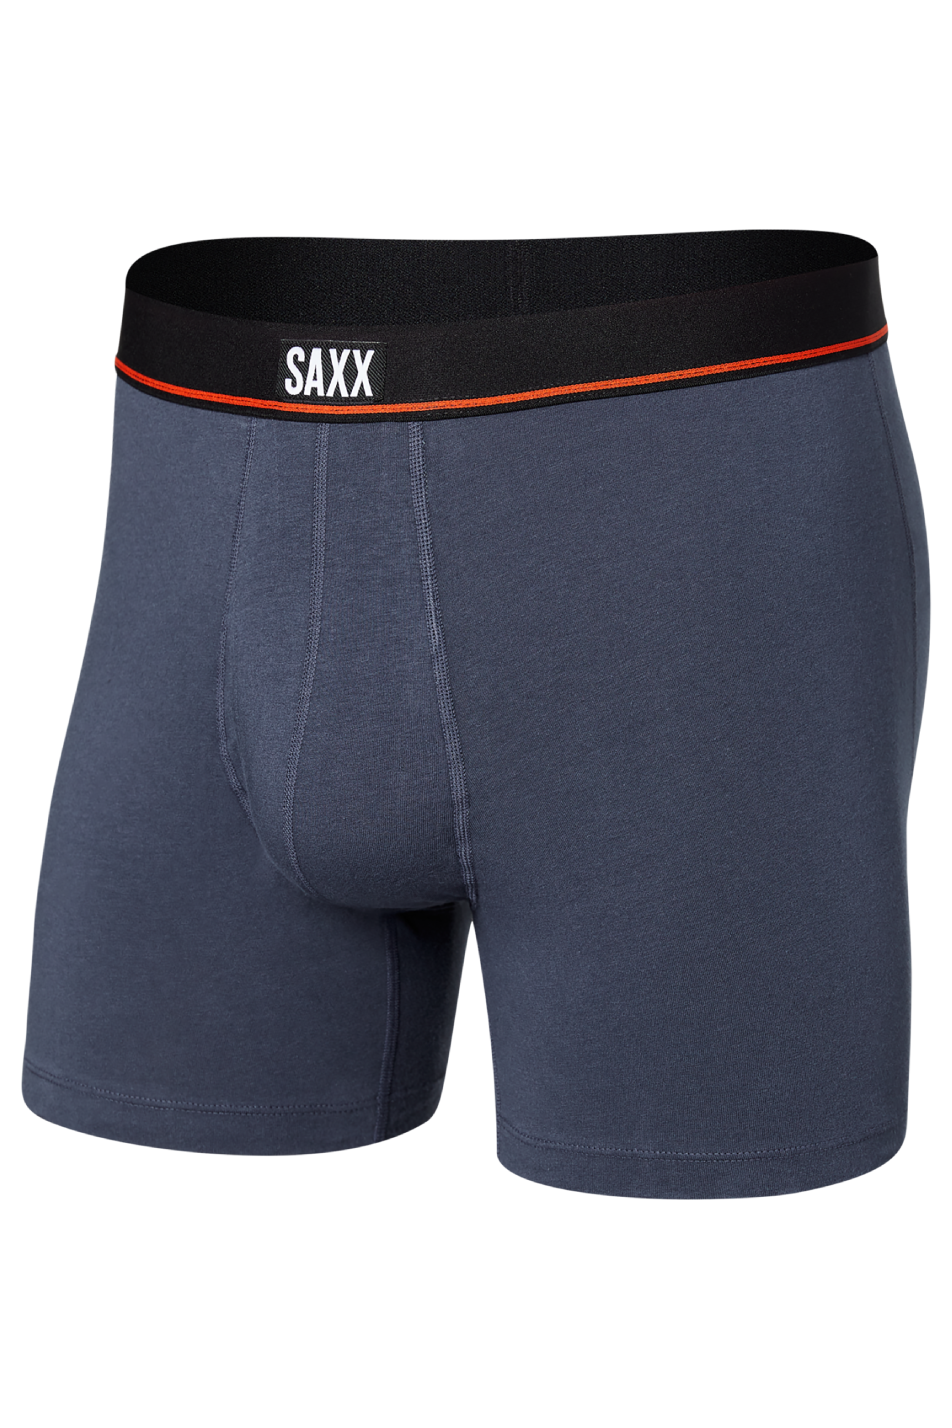 SAXX Non-Stop Stretch Men's Cotton Boxer Brief